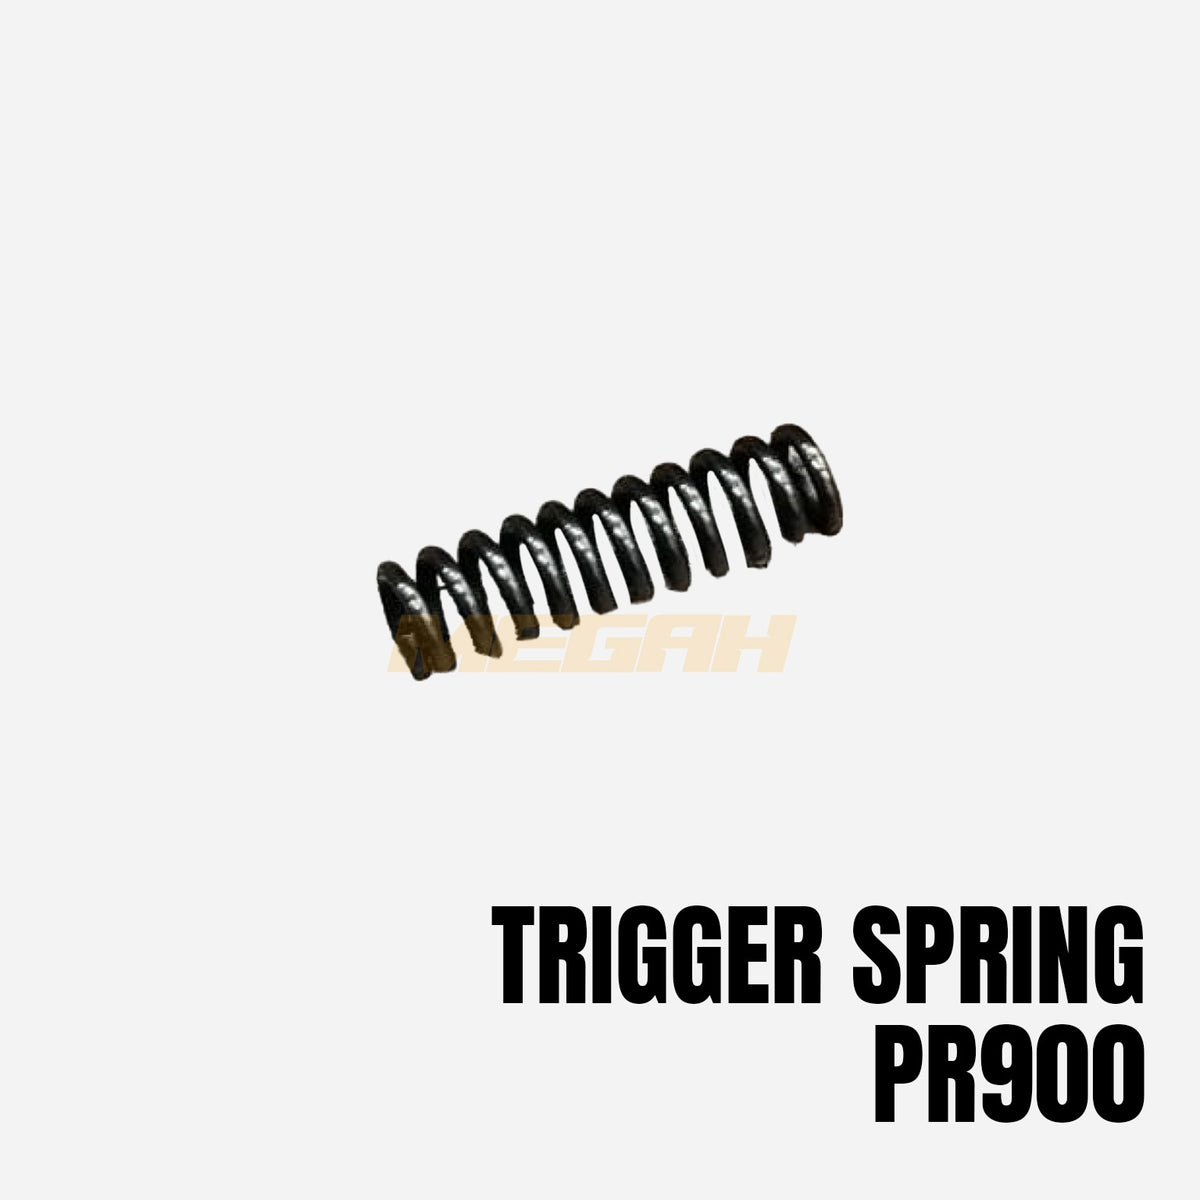 TRIGGER SPRING PR900